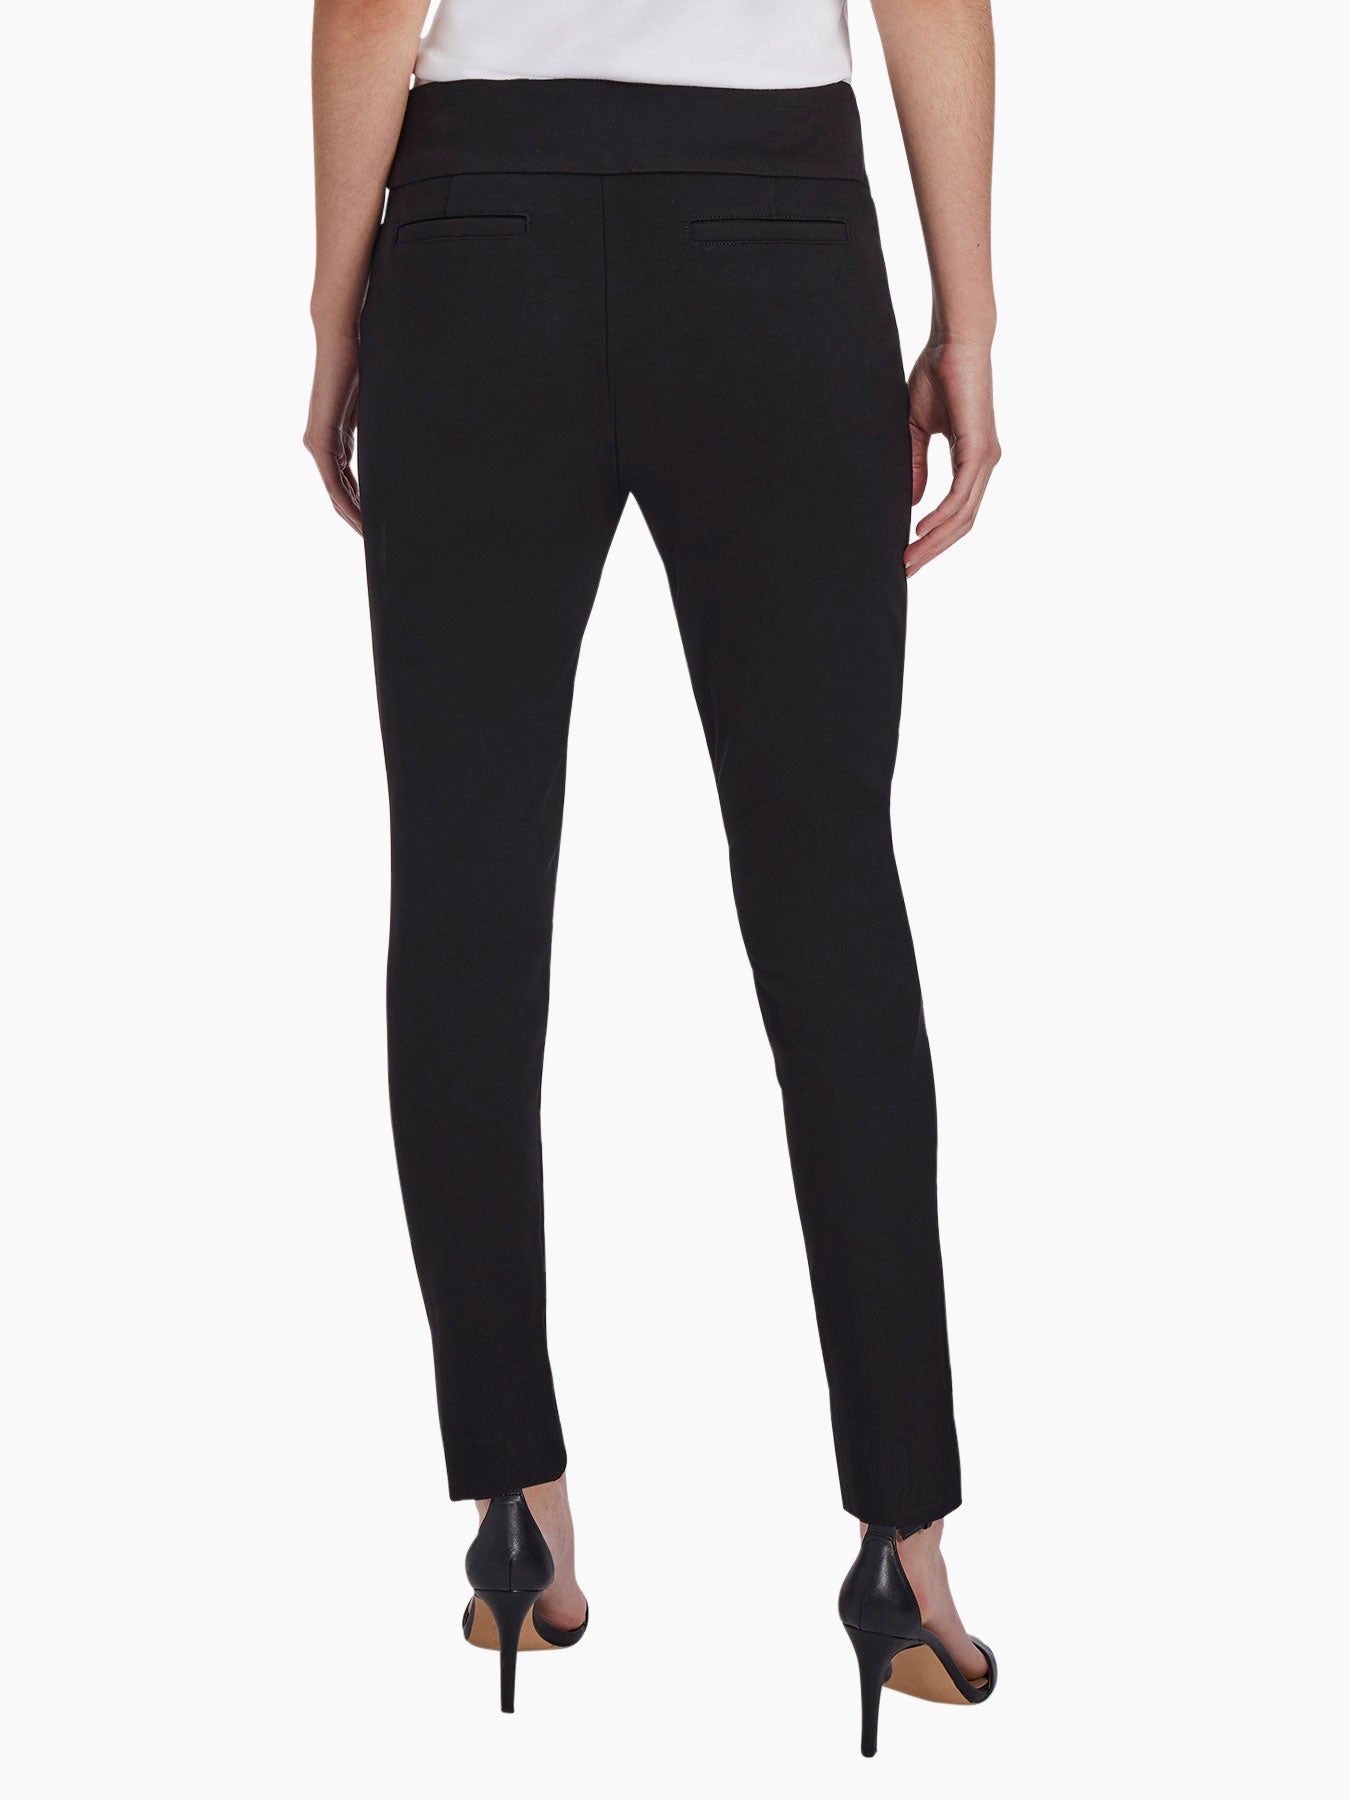 Style Co women's black casual pants L rayon nylon spandex waist 34 inseam  25